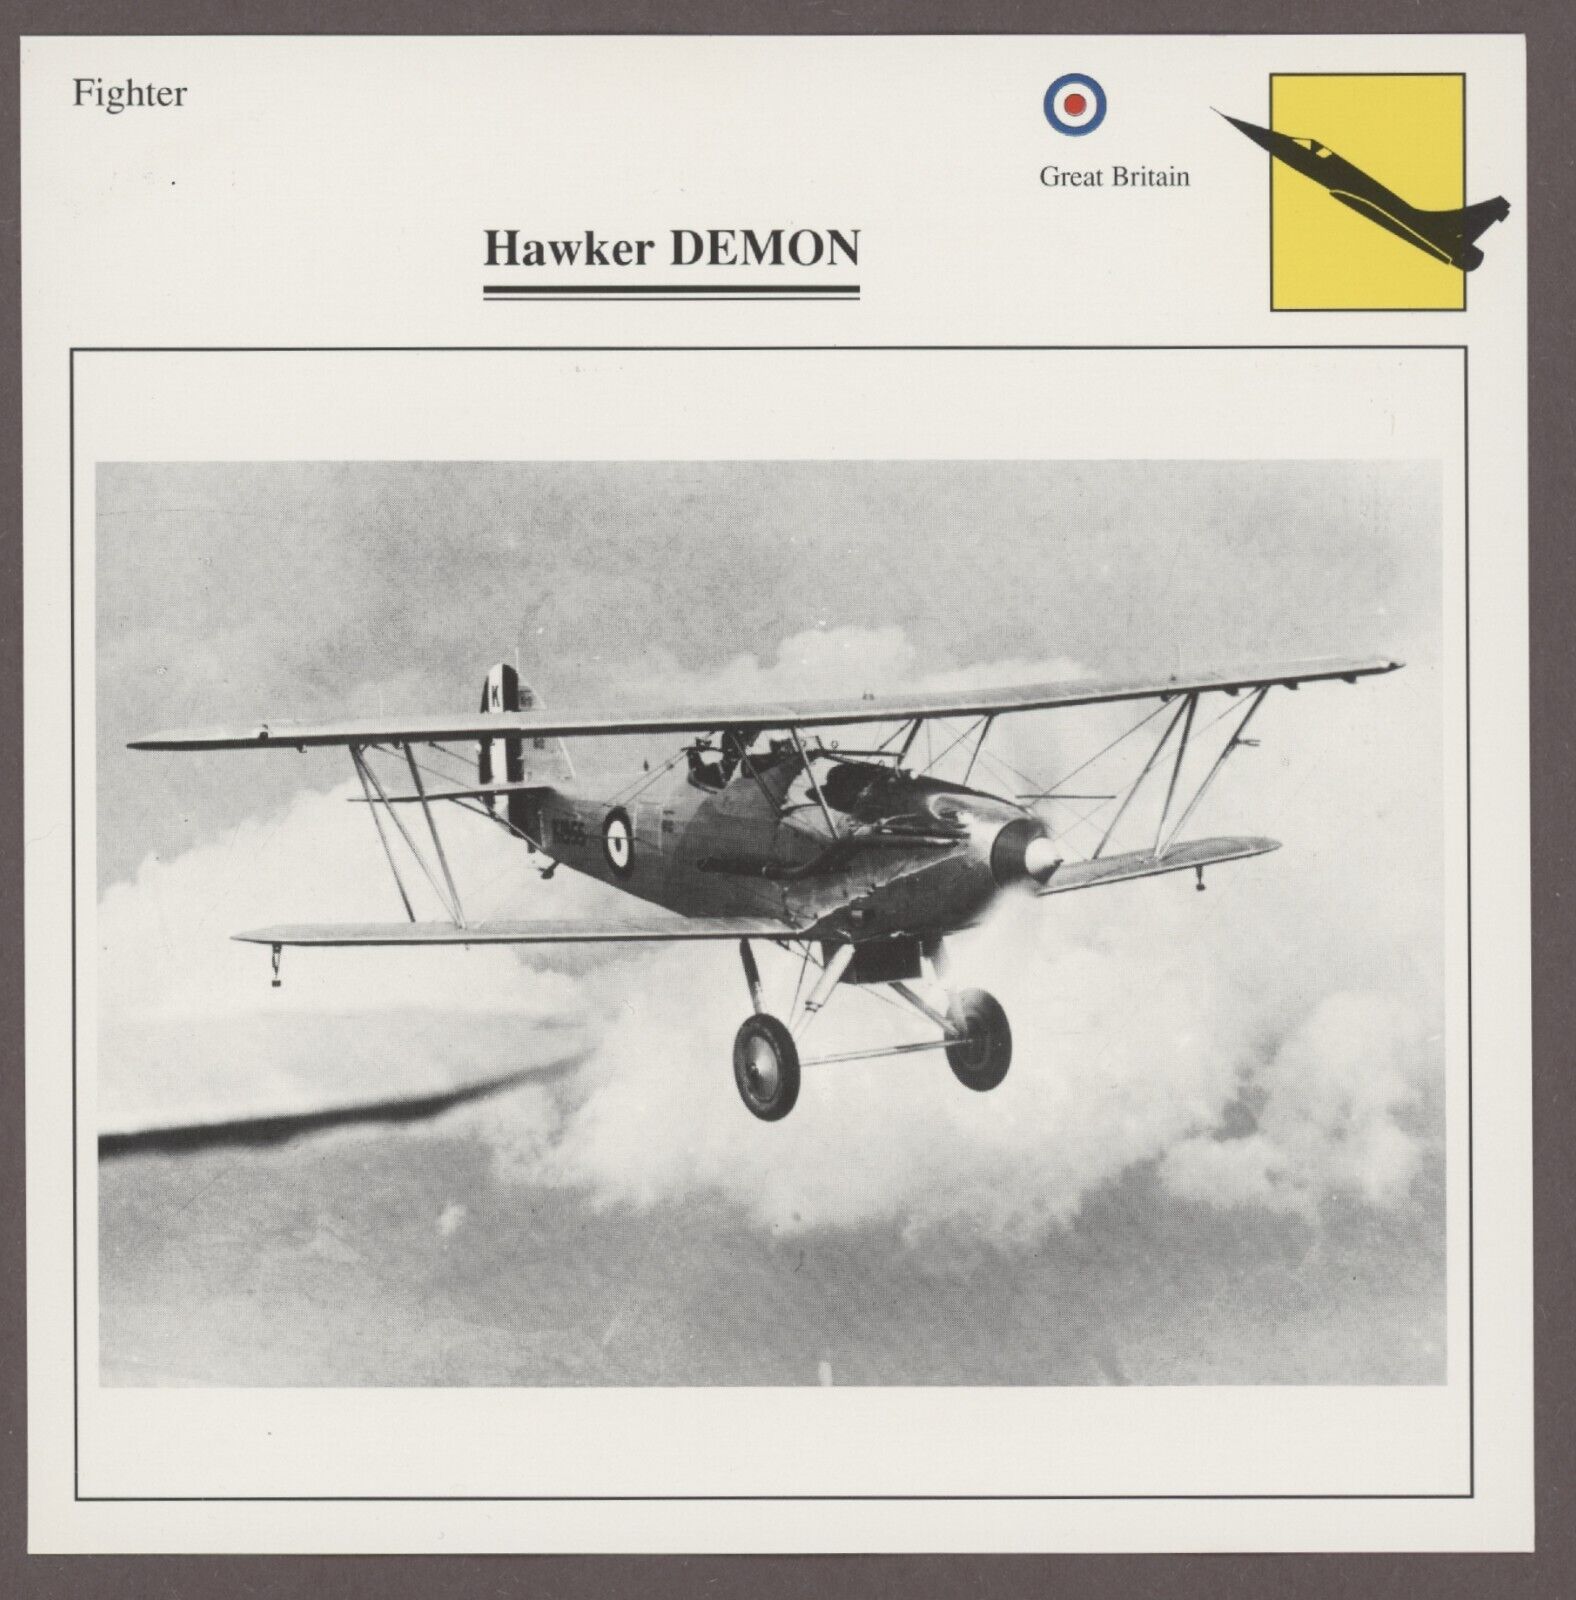 Hawker Demon Edito Service Warplane Air Military Card Great Britain